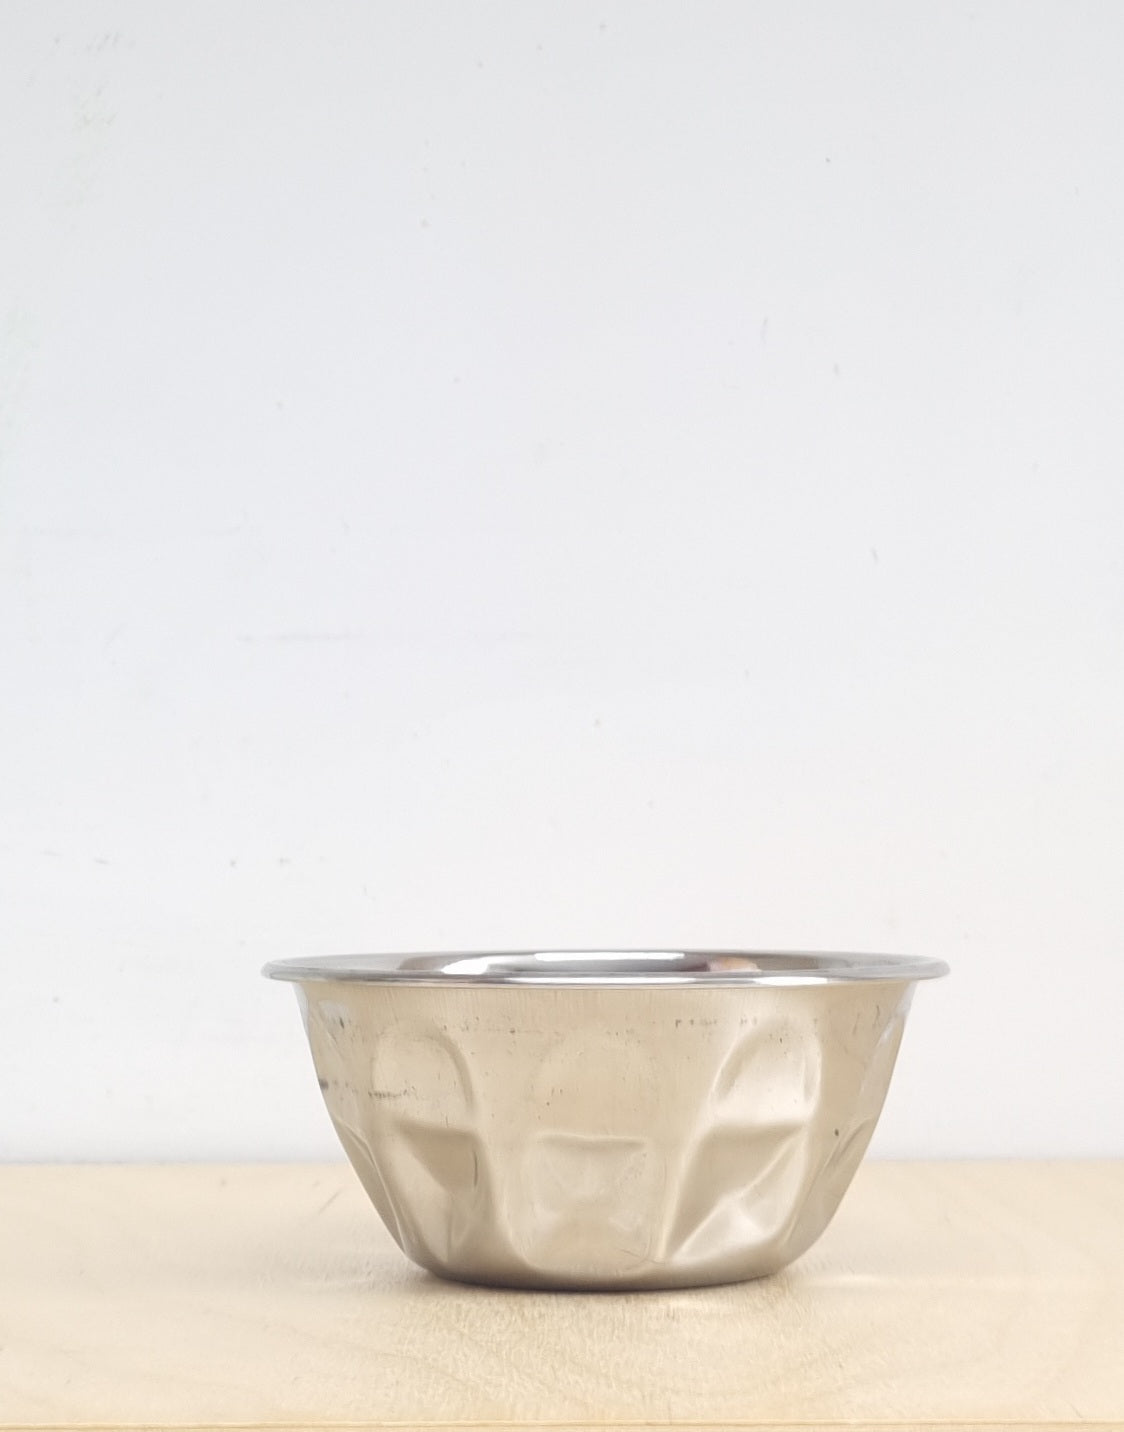 Mini stainless steel bowl